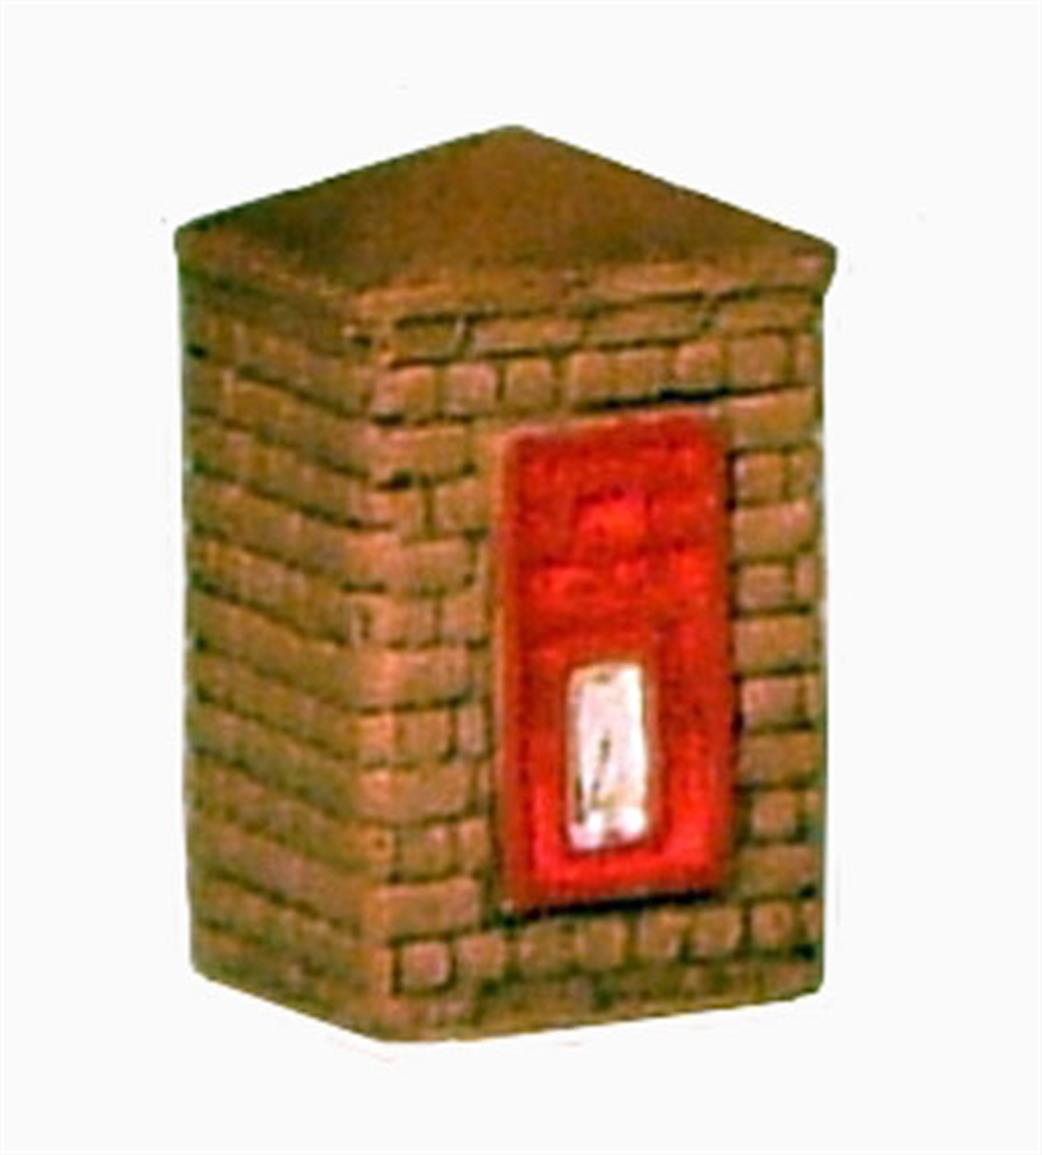 Harburn Hamlet OO SS339 Post Box in Brick Column